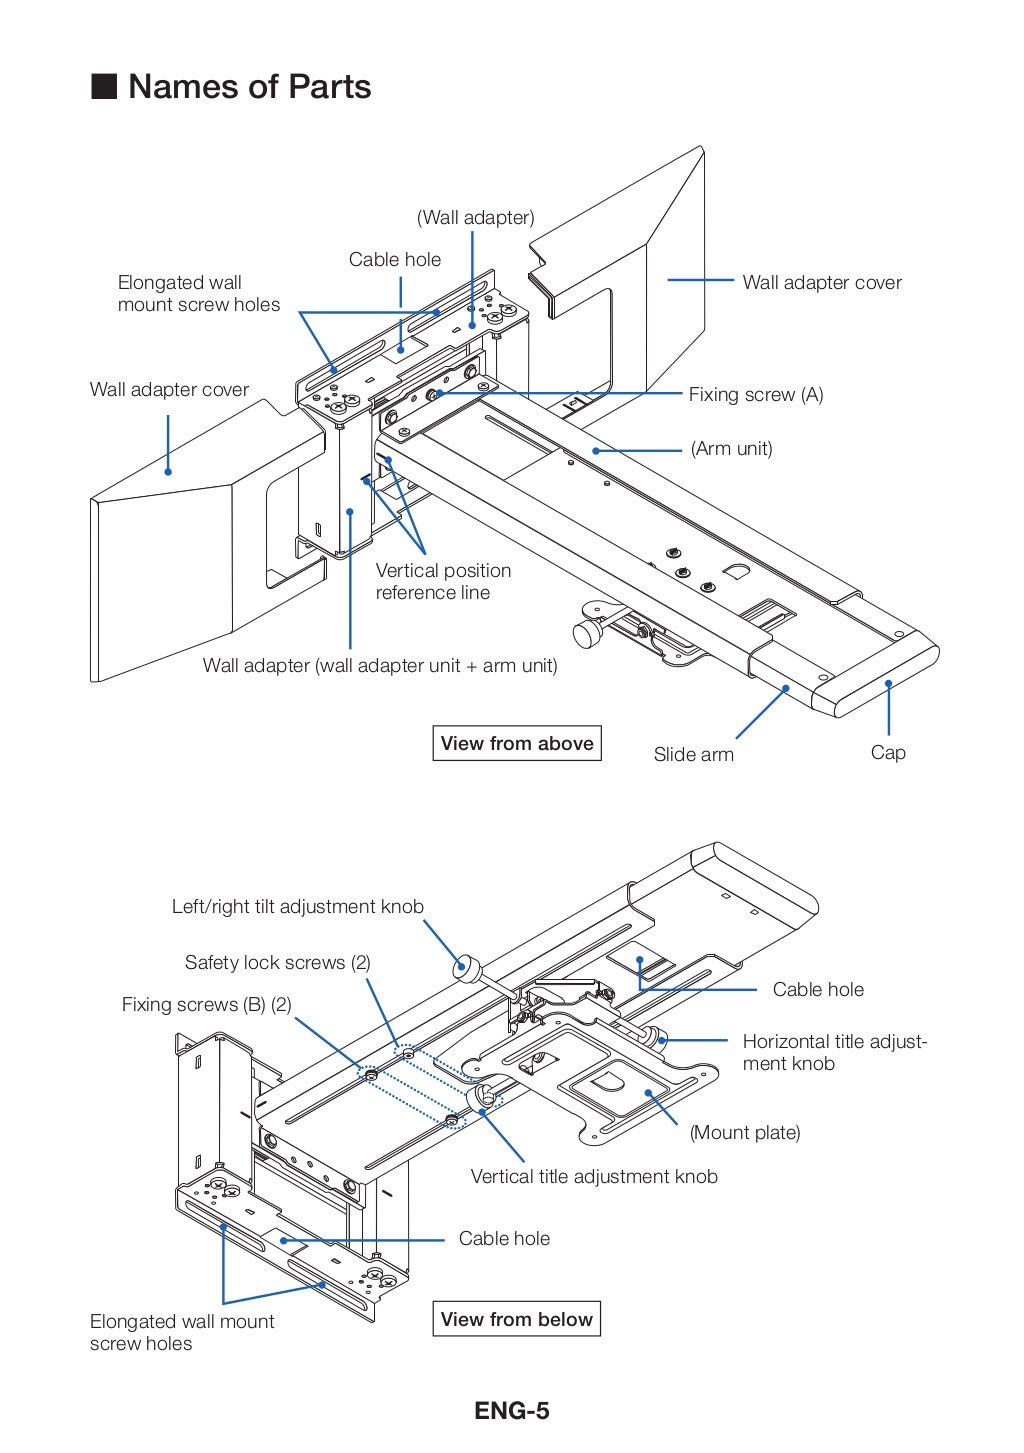 Nec wall mount user manual